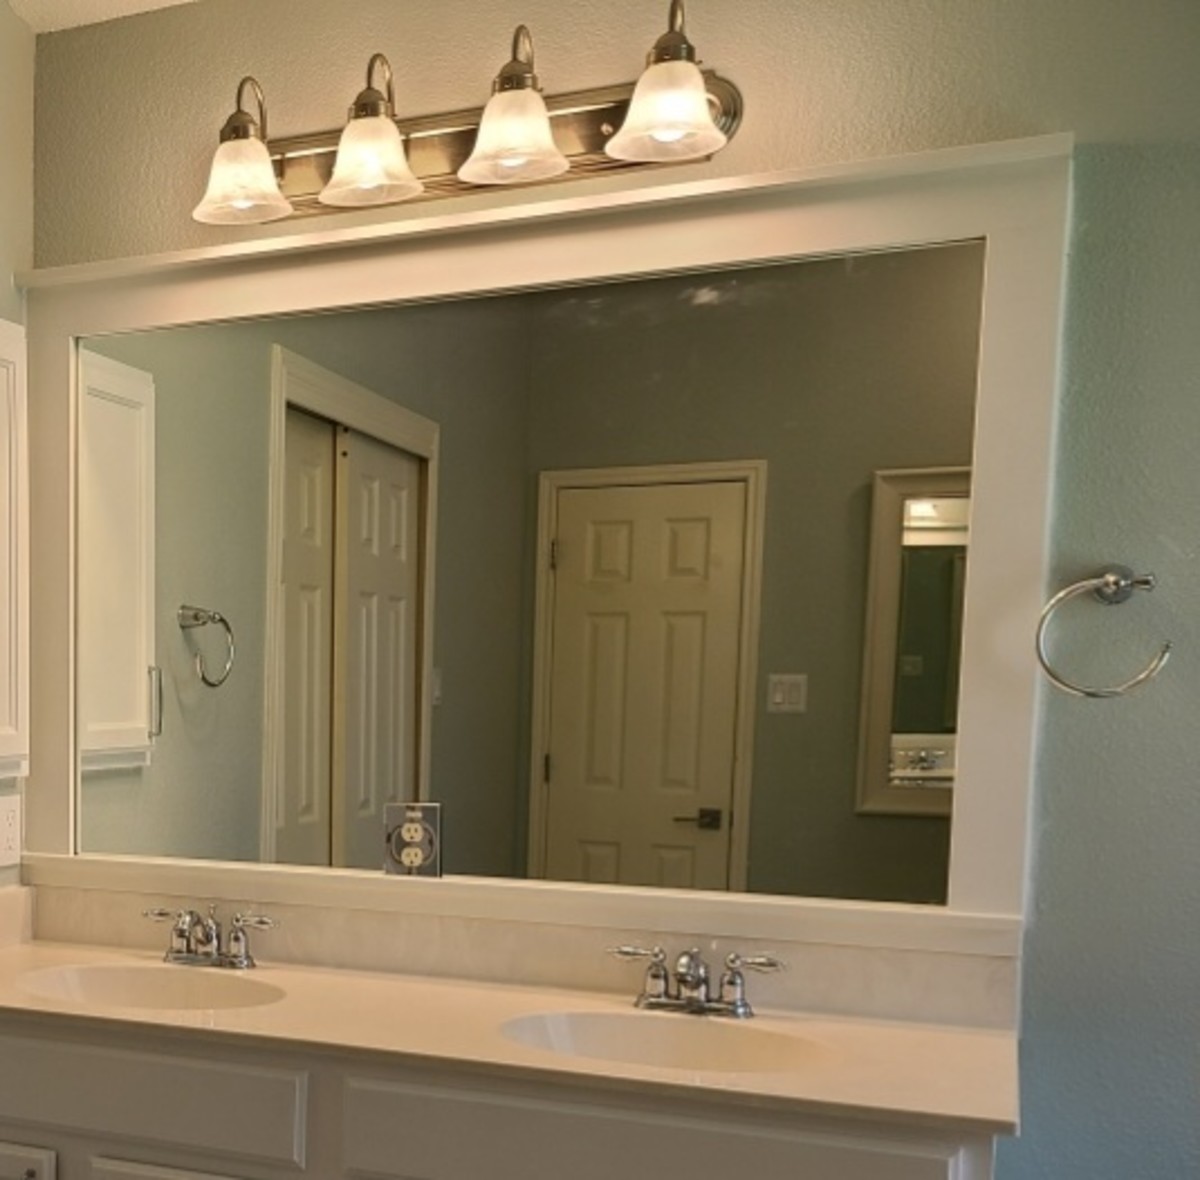 How to Frame a Builder-Grade Bathroom Mirror the Easy Way